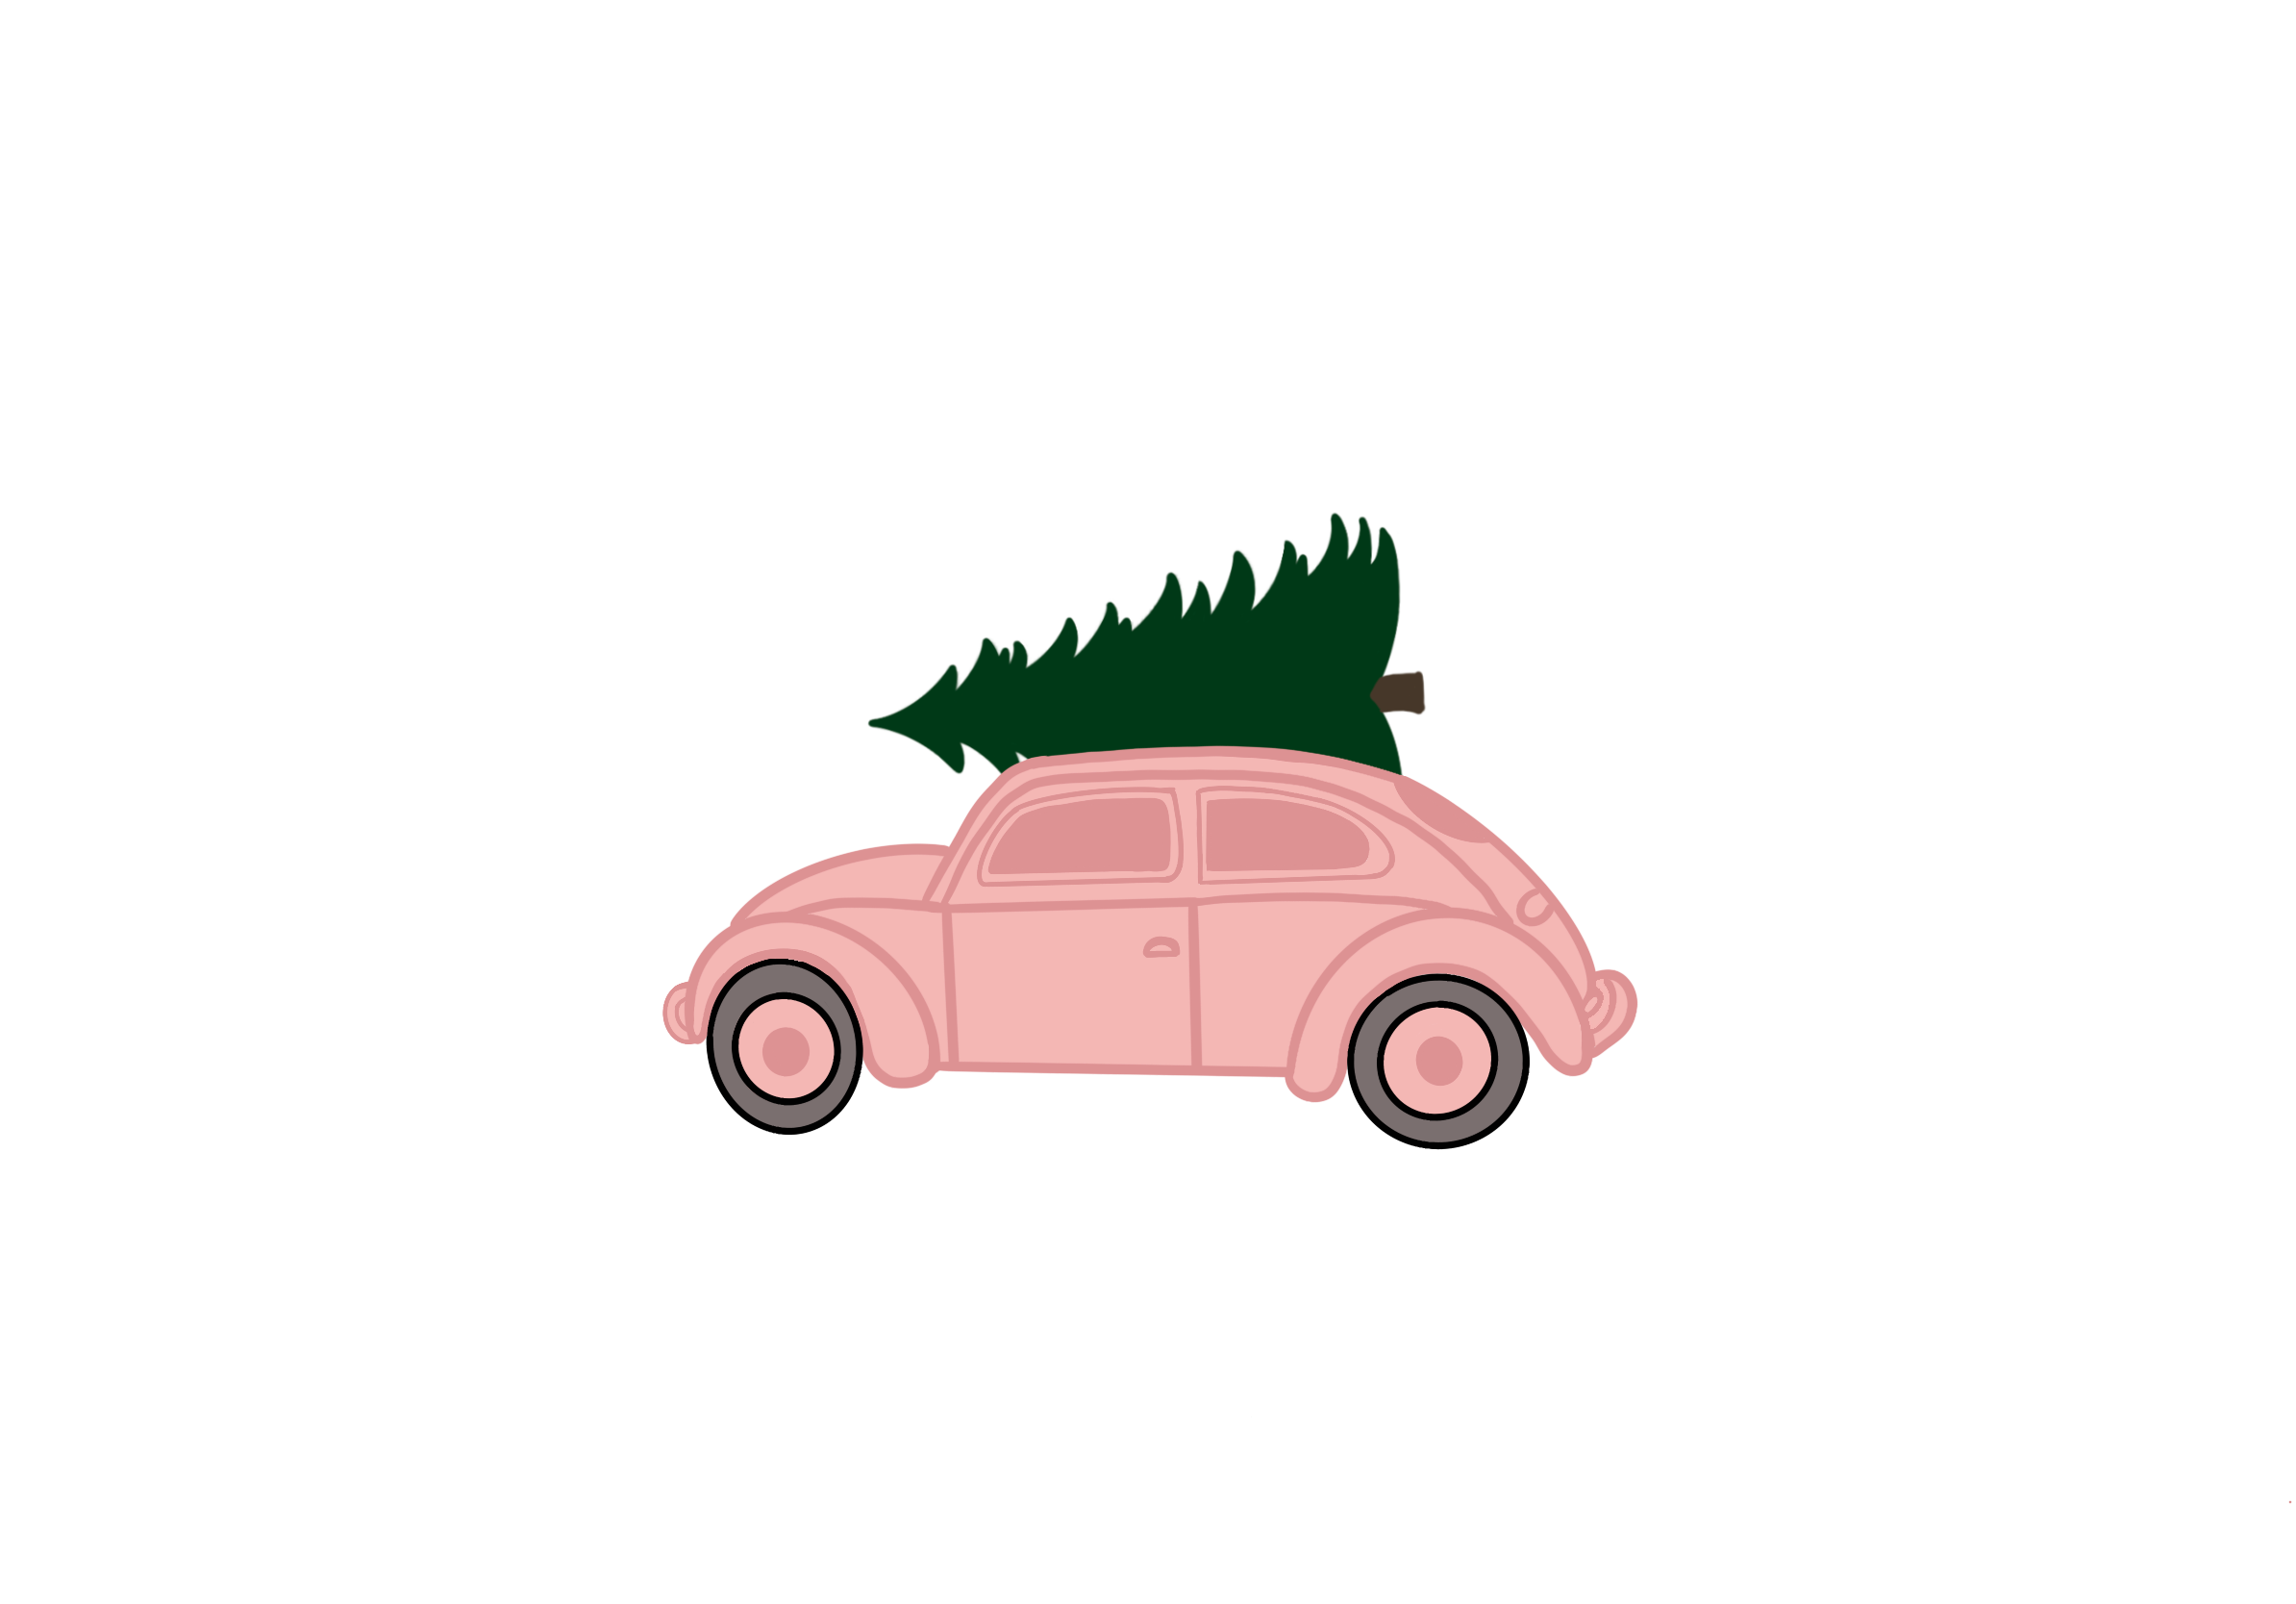 Car with Christmas Tree Sticker